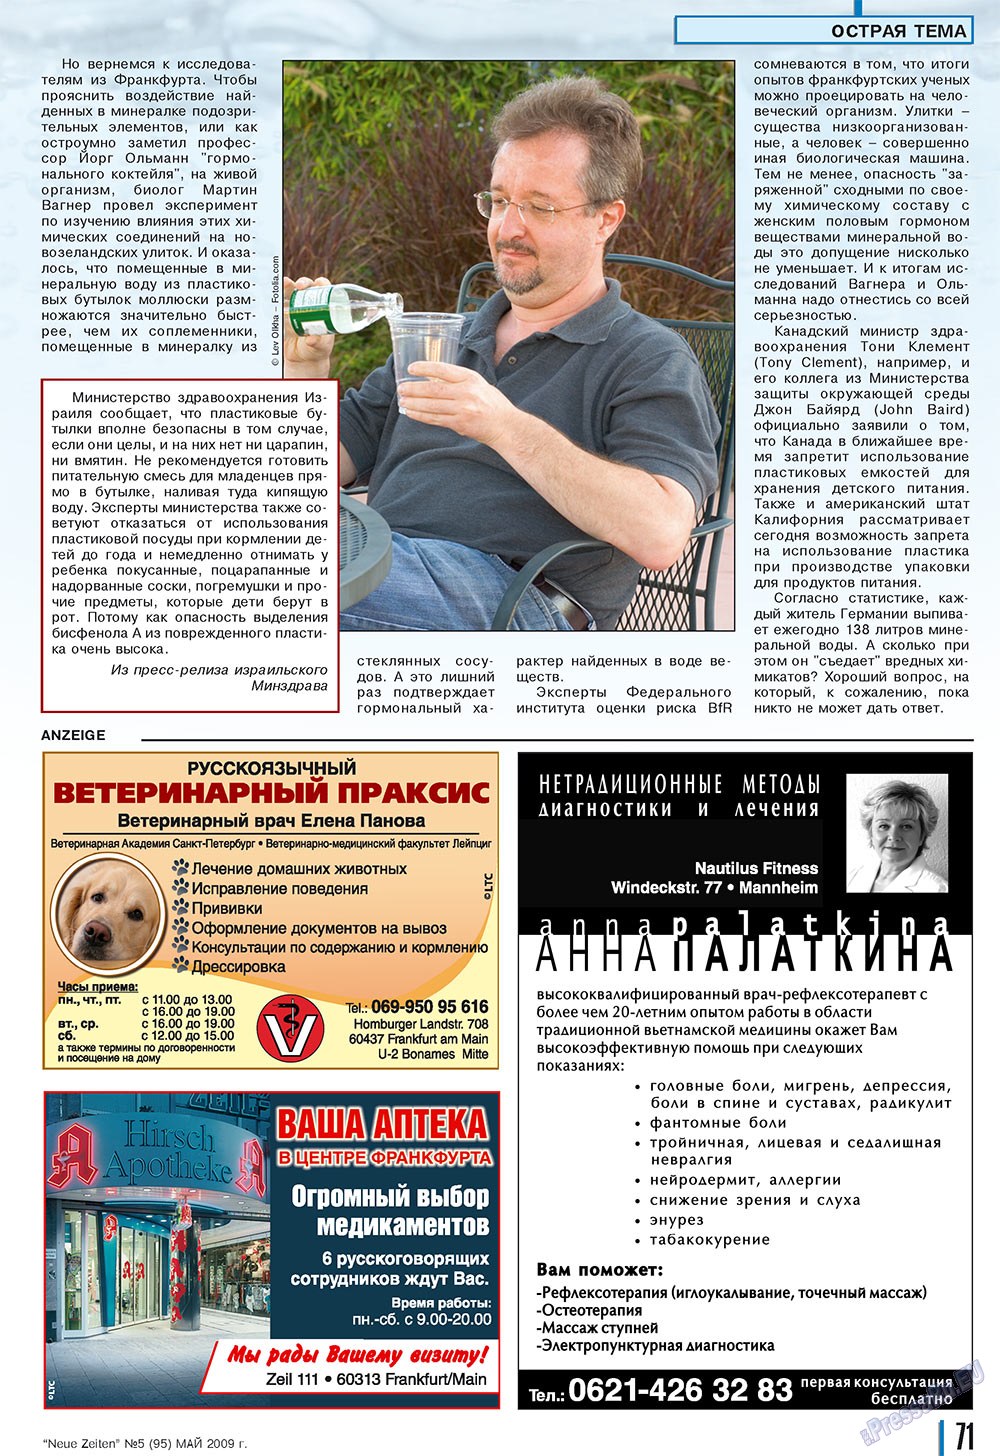 Neue Zeiten (журнал). 2009 год, номер 5, стр. 71